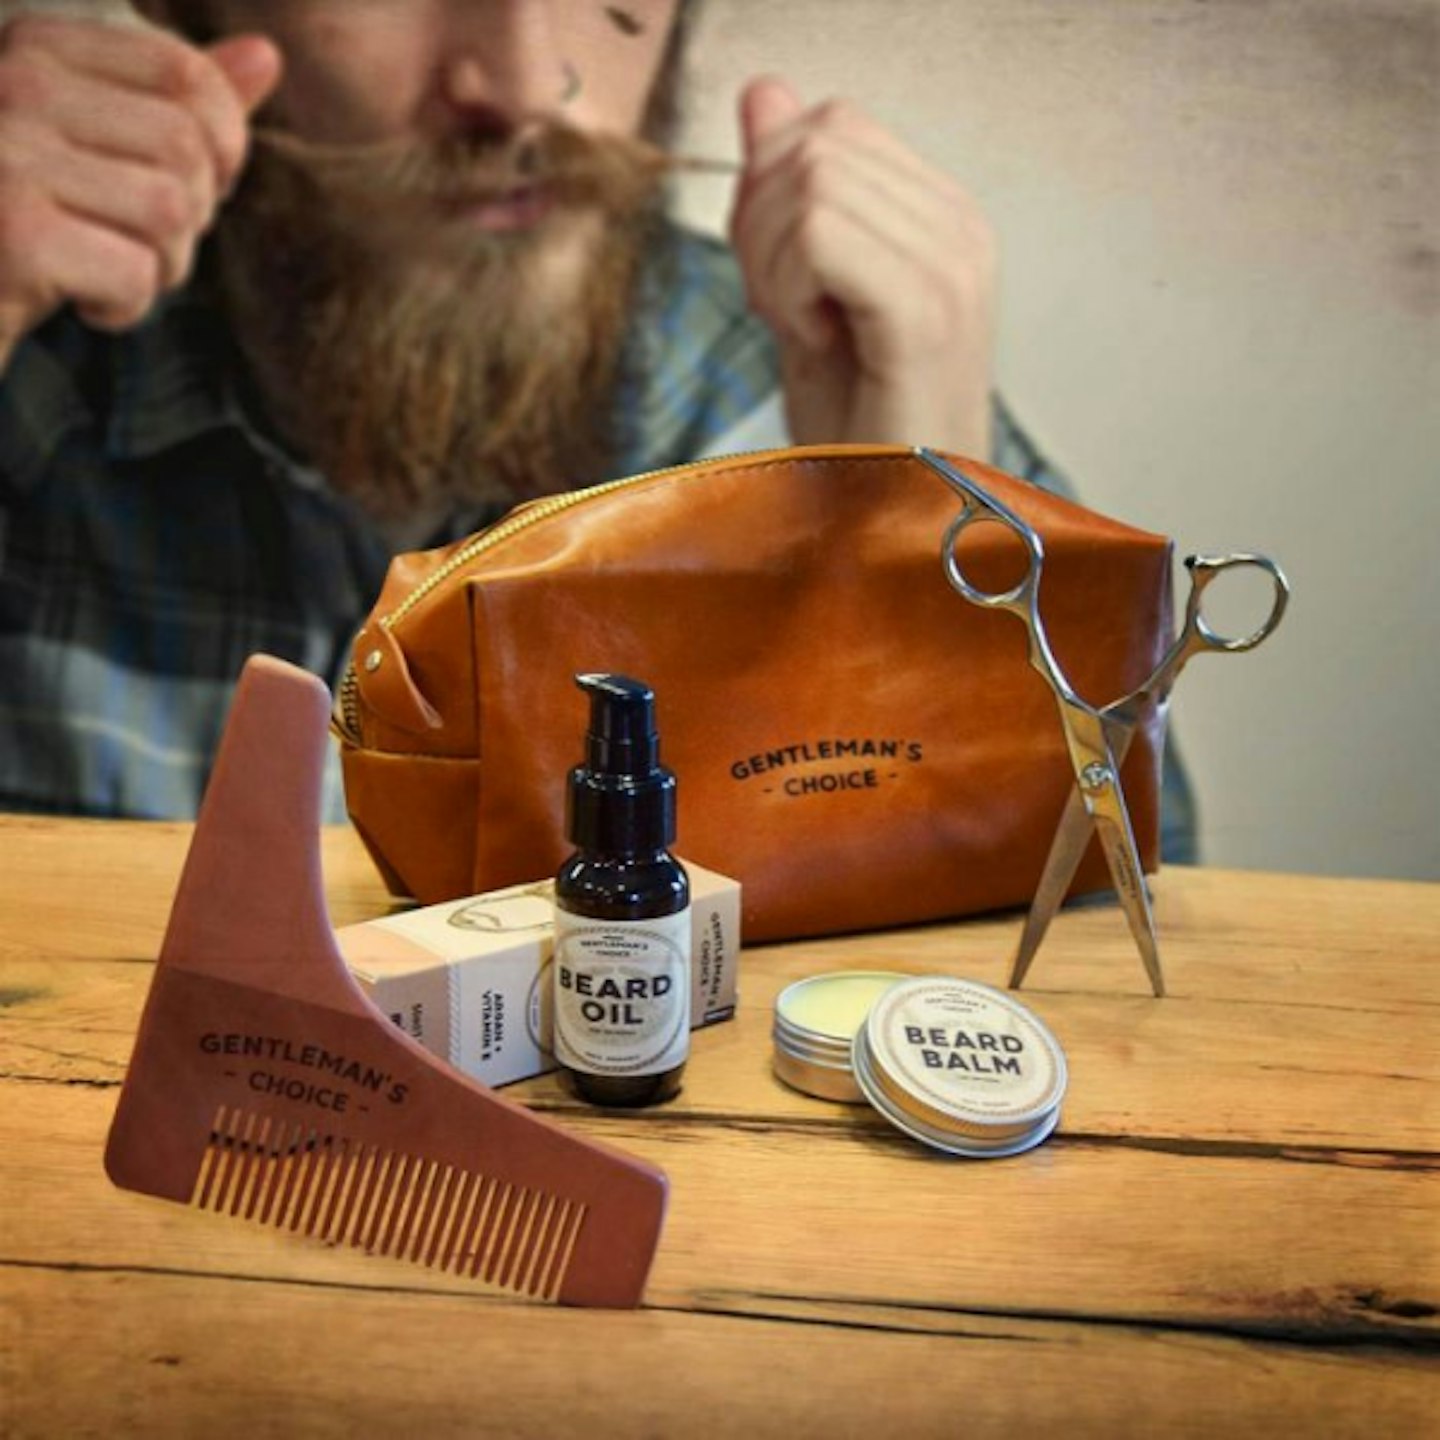 Gentleman's Choice beard grooming kit